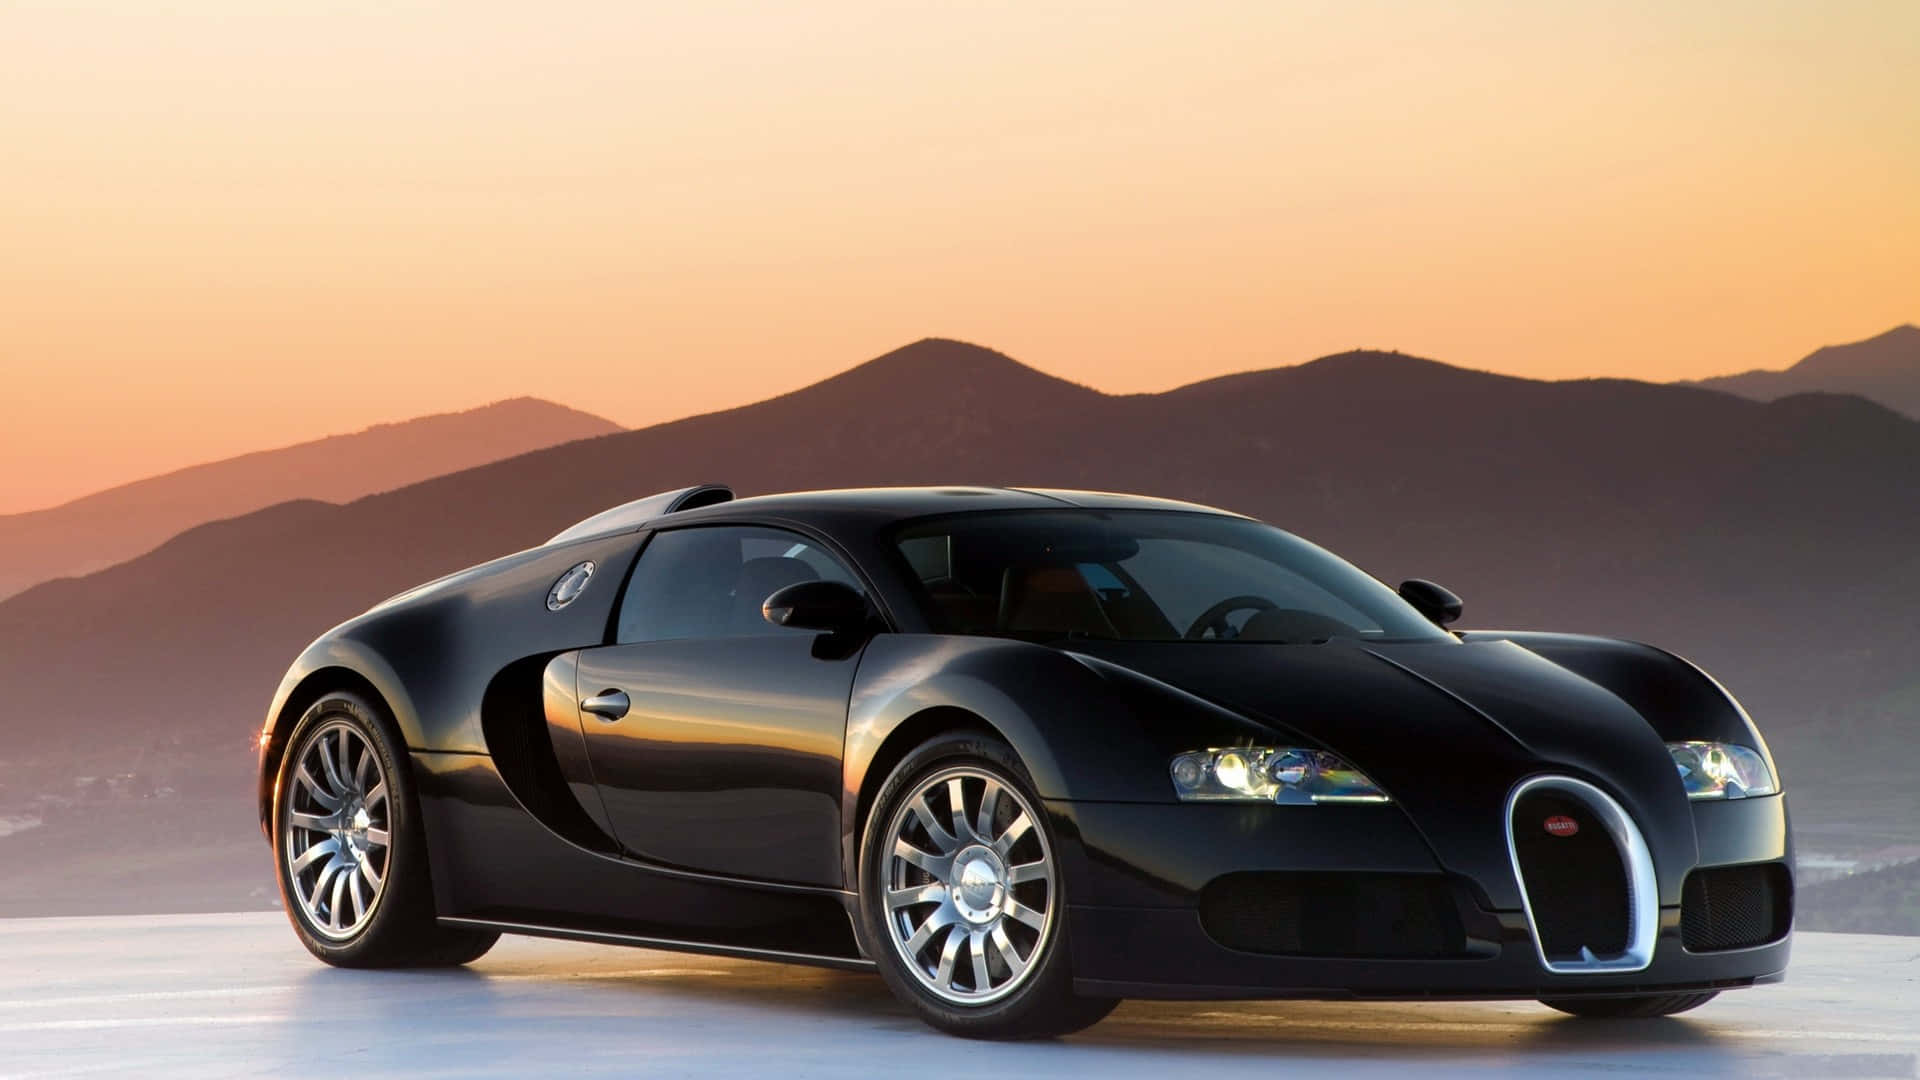 Caption: Stellar Velocity - Bugatti Veyron Wallpaper